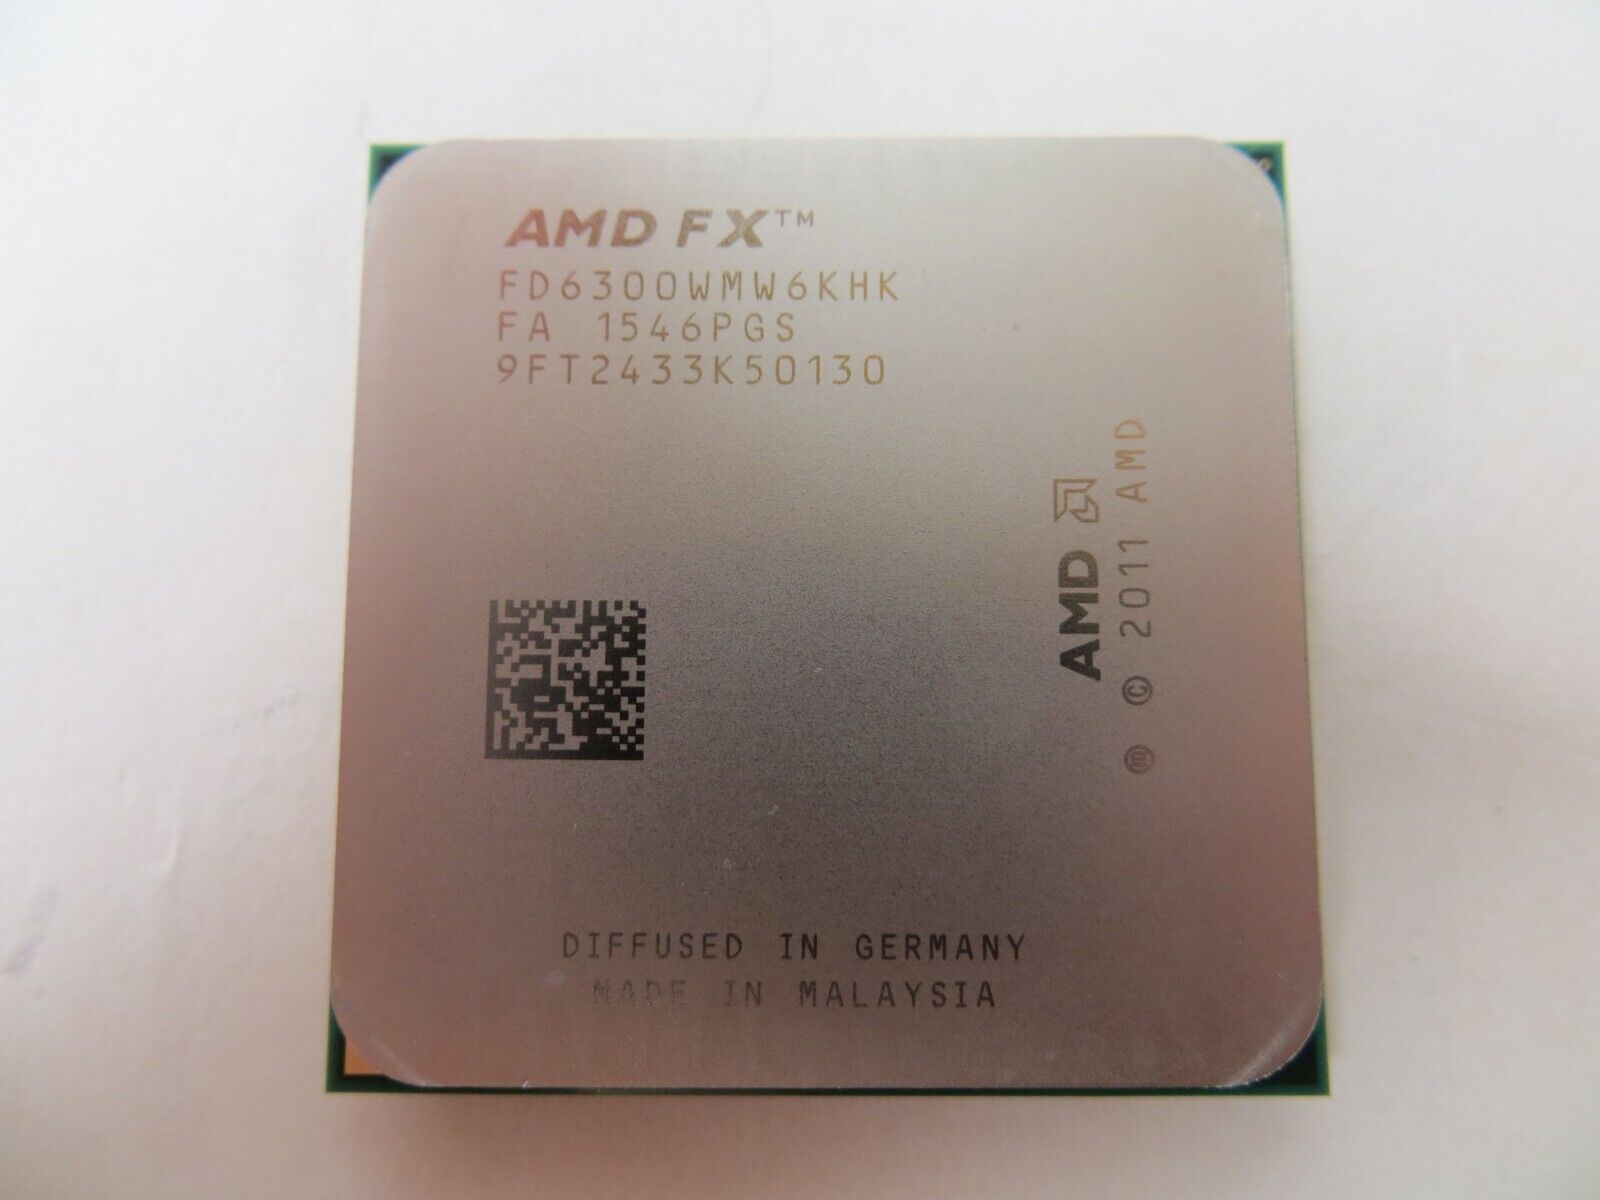 AMD FX-6300 3.5-4.1 GHz 6-Core AM3+ CPU Processor FD6300WMW6KHK Tested